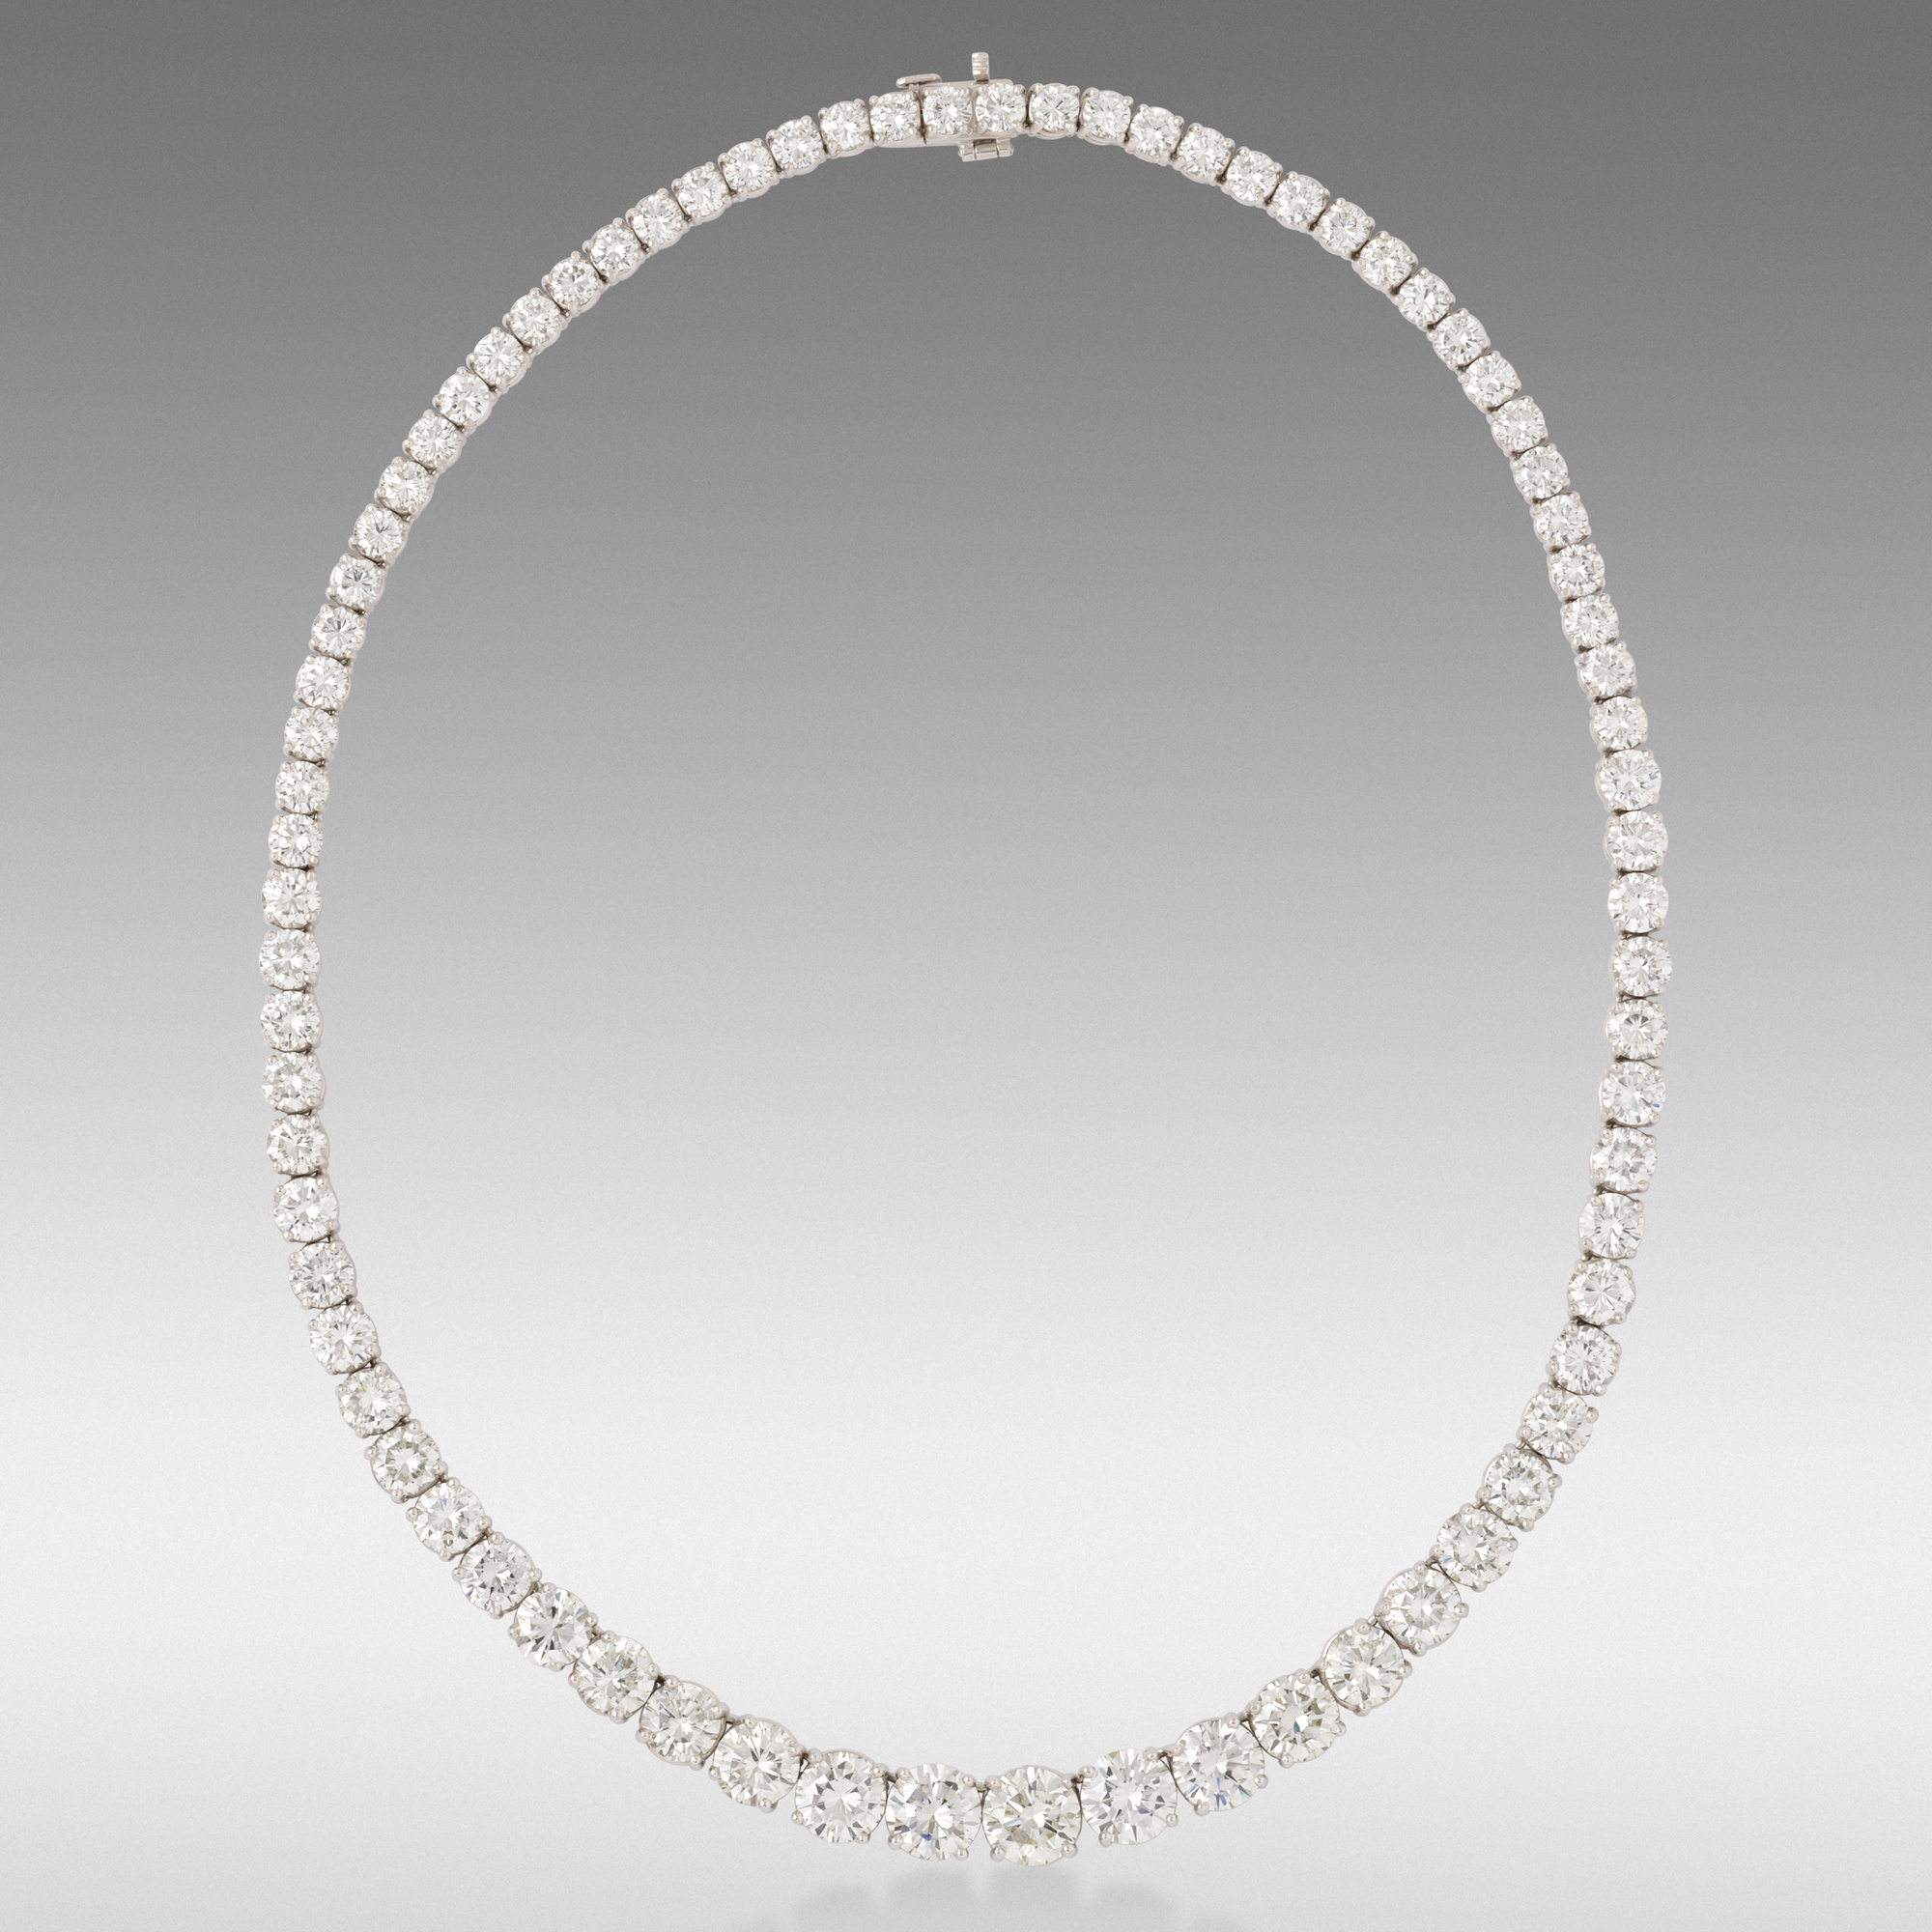 132: VAN CLEEF & ARPELS, Diamond and platinum rivière necklace 